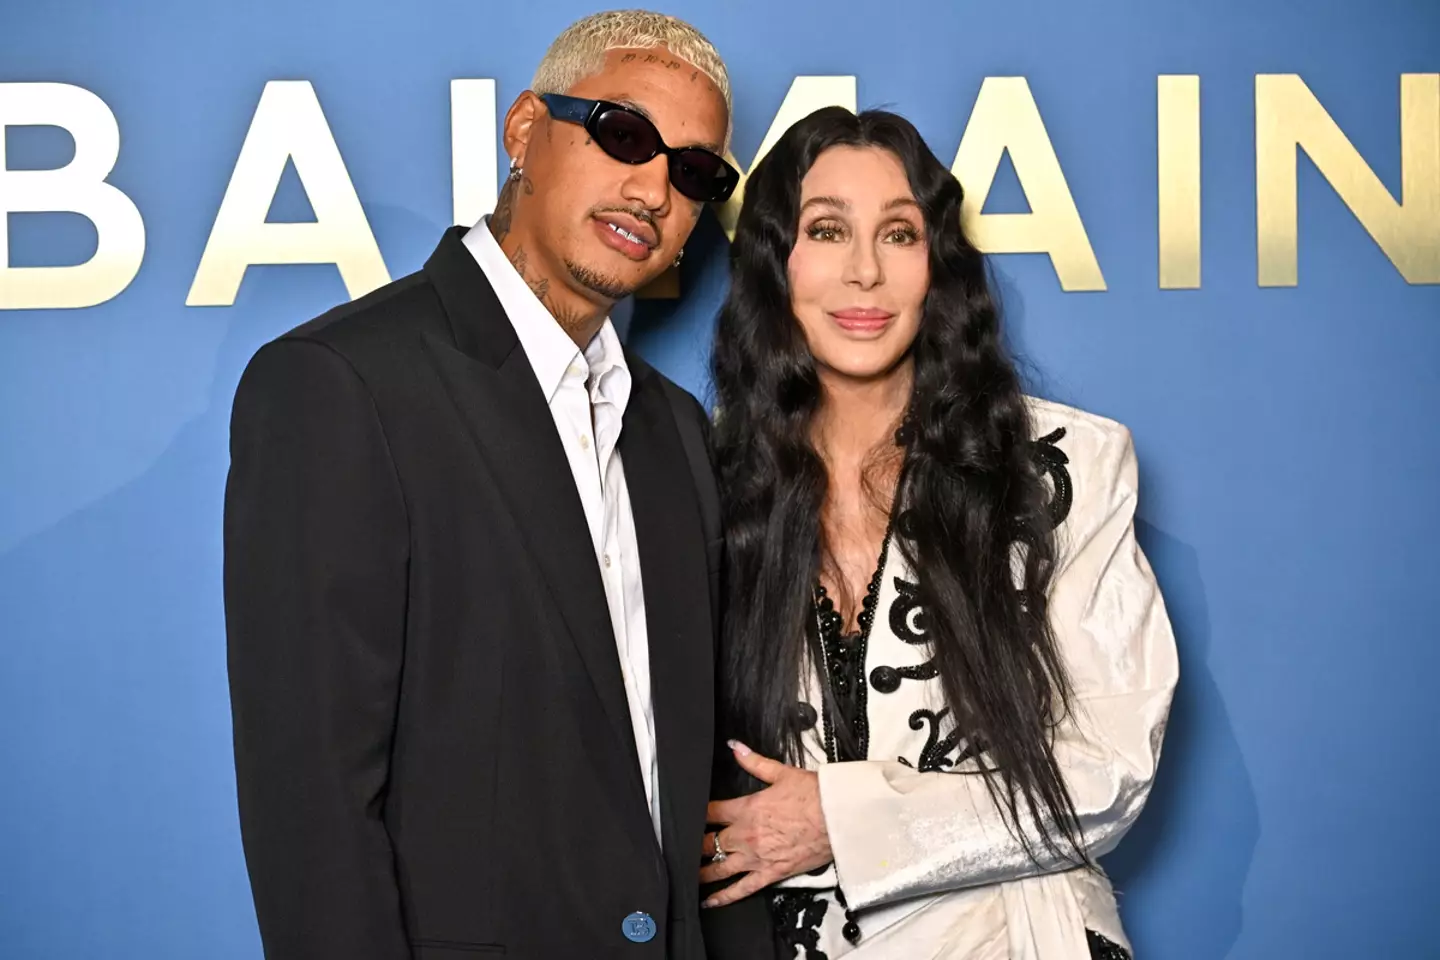 Cher and her boyfriend Alexander have a 40-year age gap.